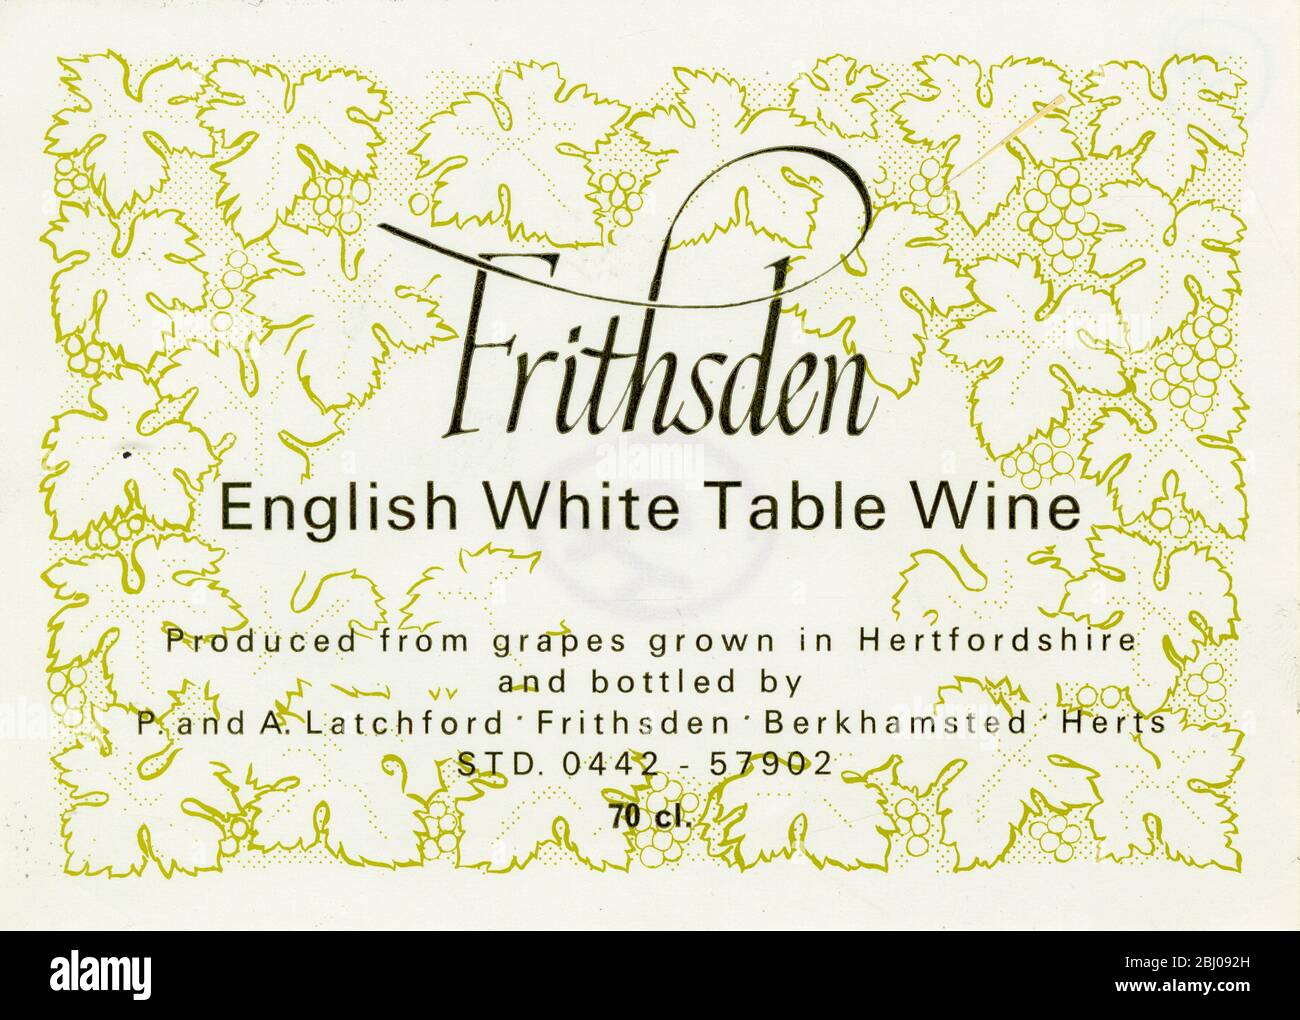 Etichetta del vino - Frithsden White Table Wine. Prodotto nell'Hertfordshire e imbottigliato da P & A Latchford a Frithsden, Berkhamsted, Hertfordshire. - 1977 Foto Stock